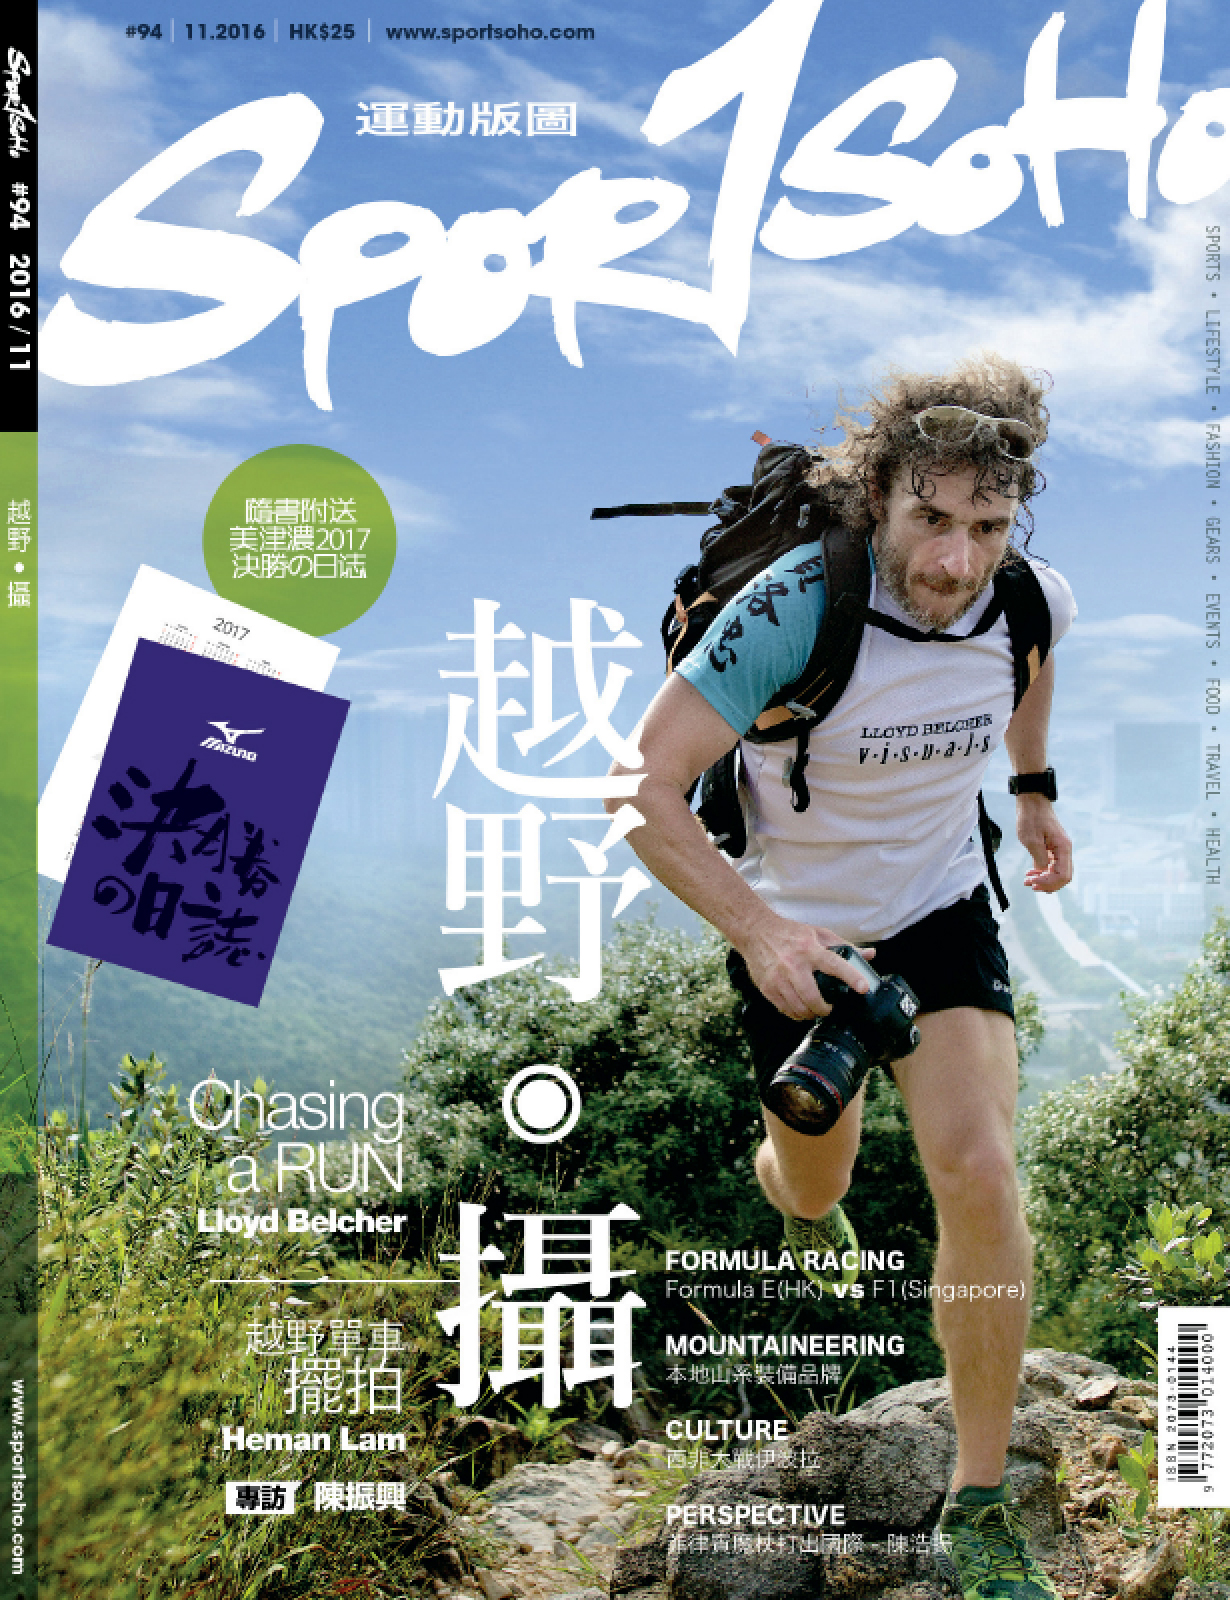 Sportsoho Magazine Cover - November 2016 edition